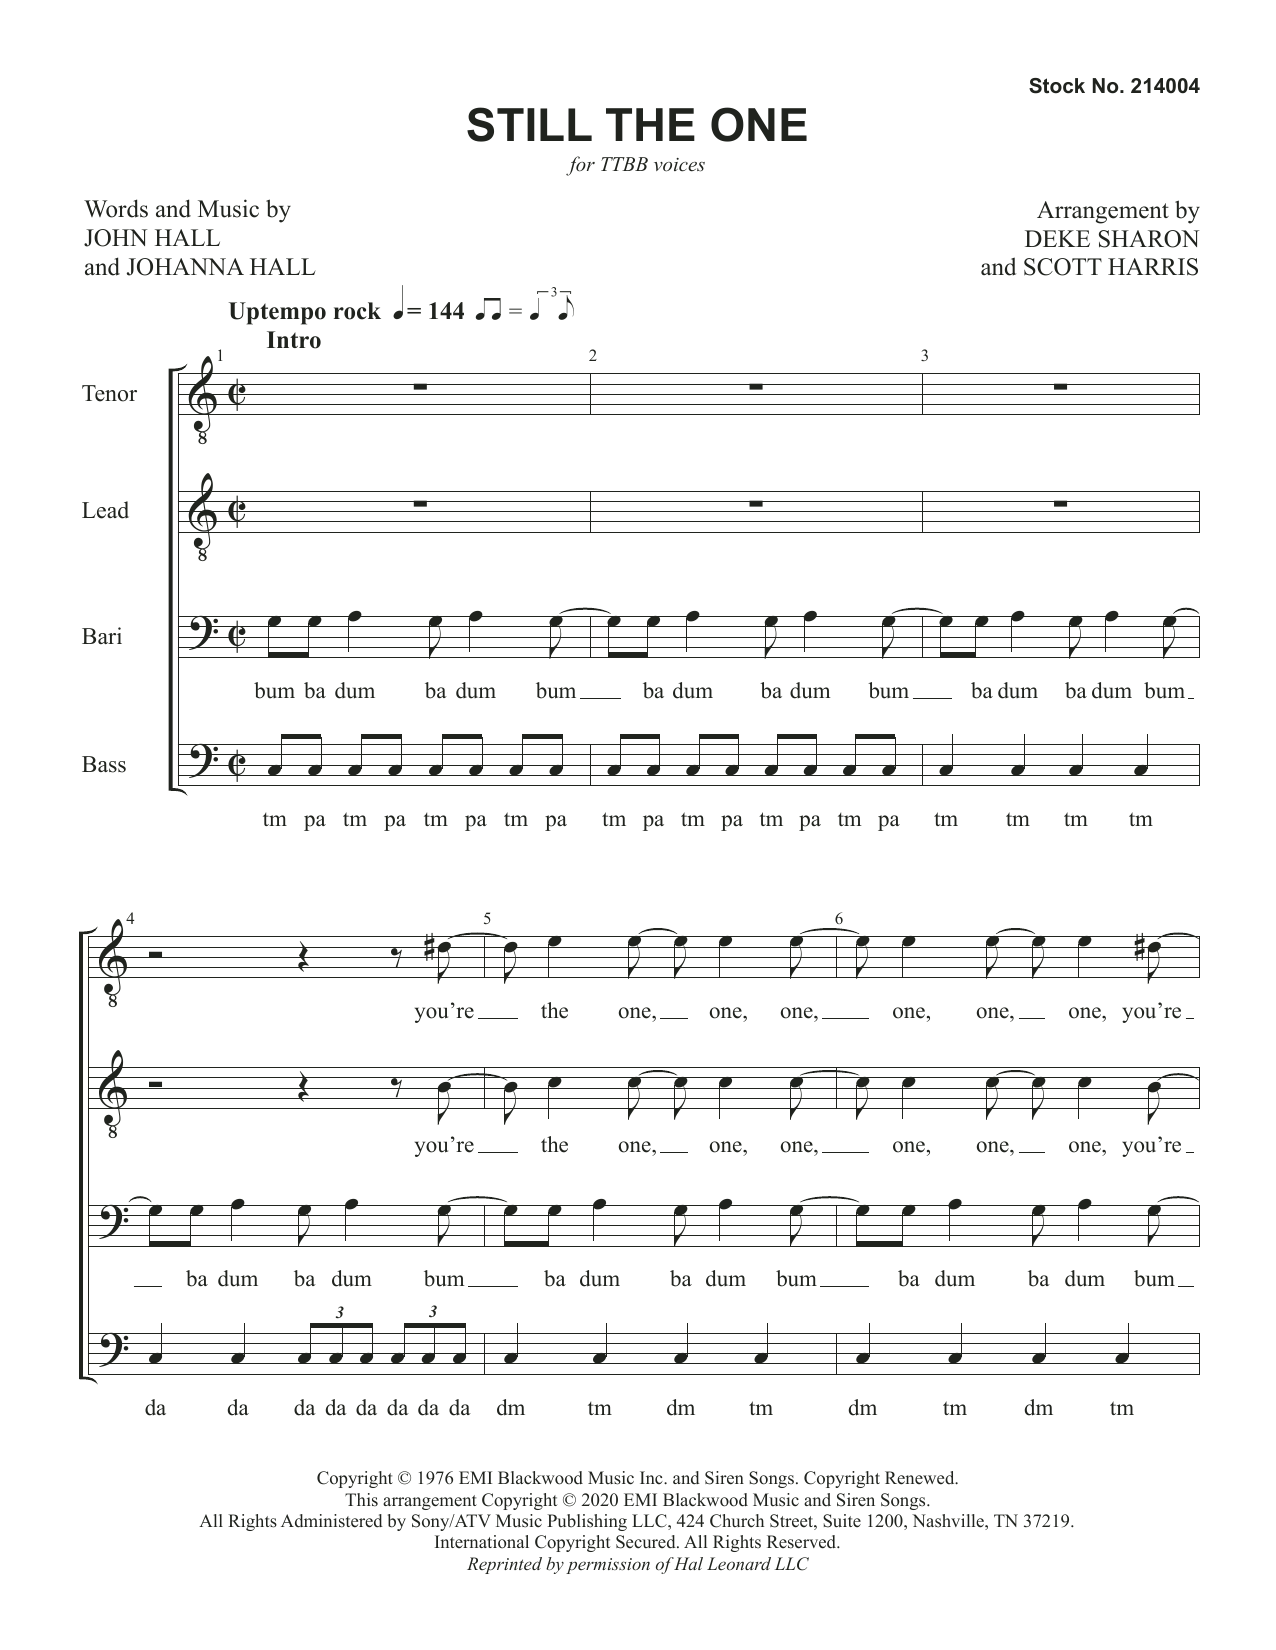 John Hall & Johanna Hall Still The One (arr. Deke Sharon & Scott Harris) Sheet Music Notes & Chords for TTBB Choir - Download or Print PDF